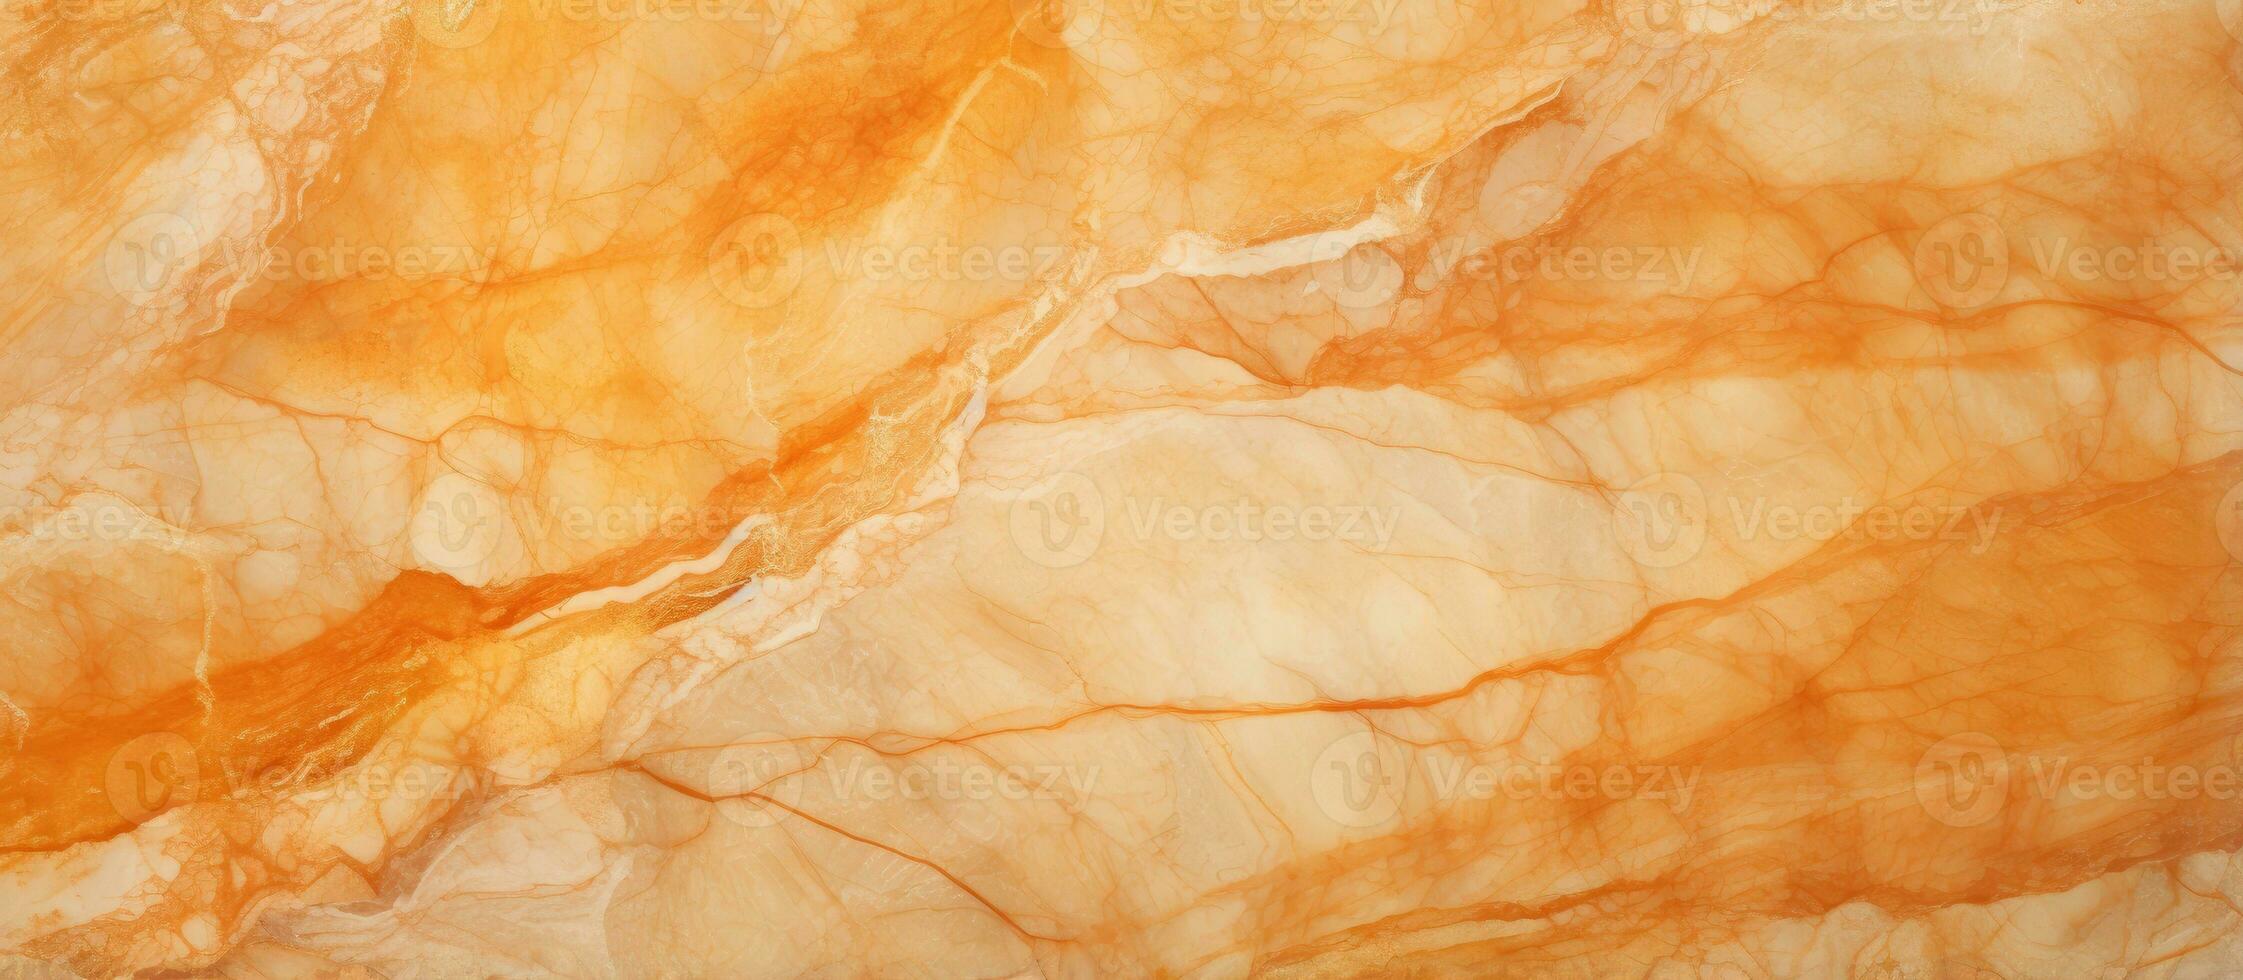 Marble texture background in orange beige color photo